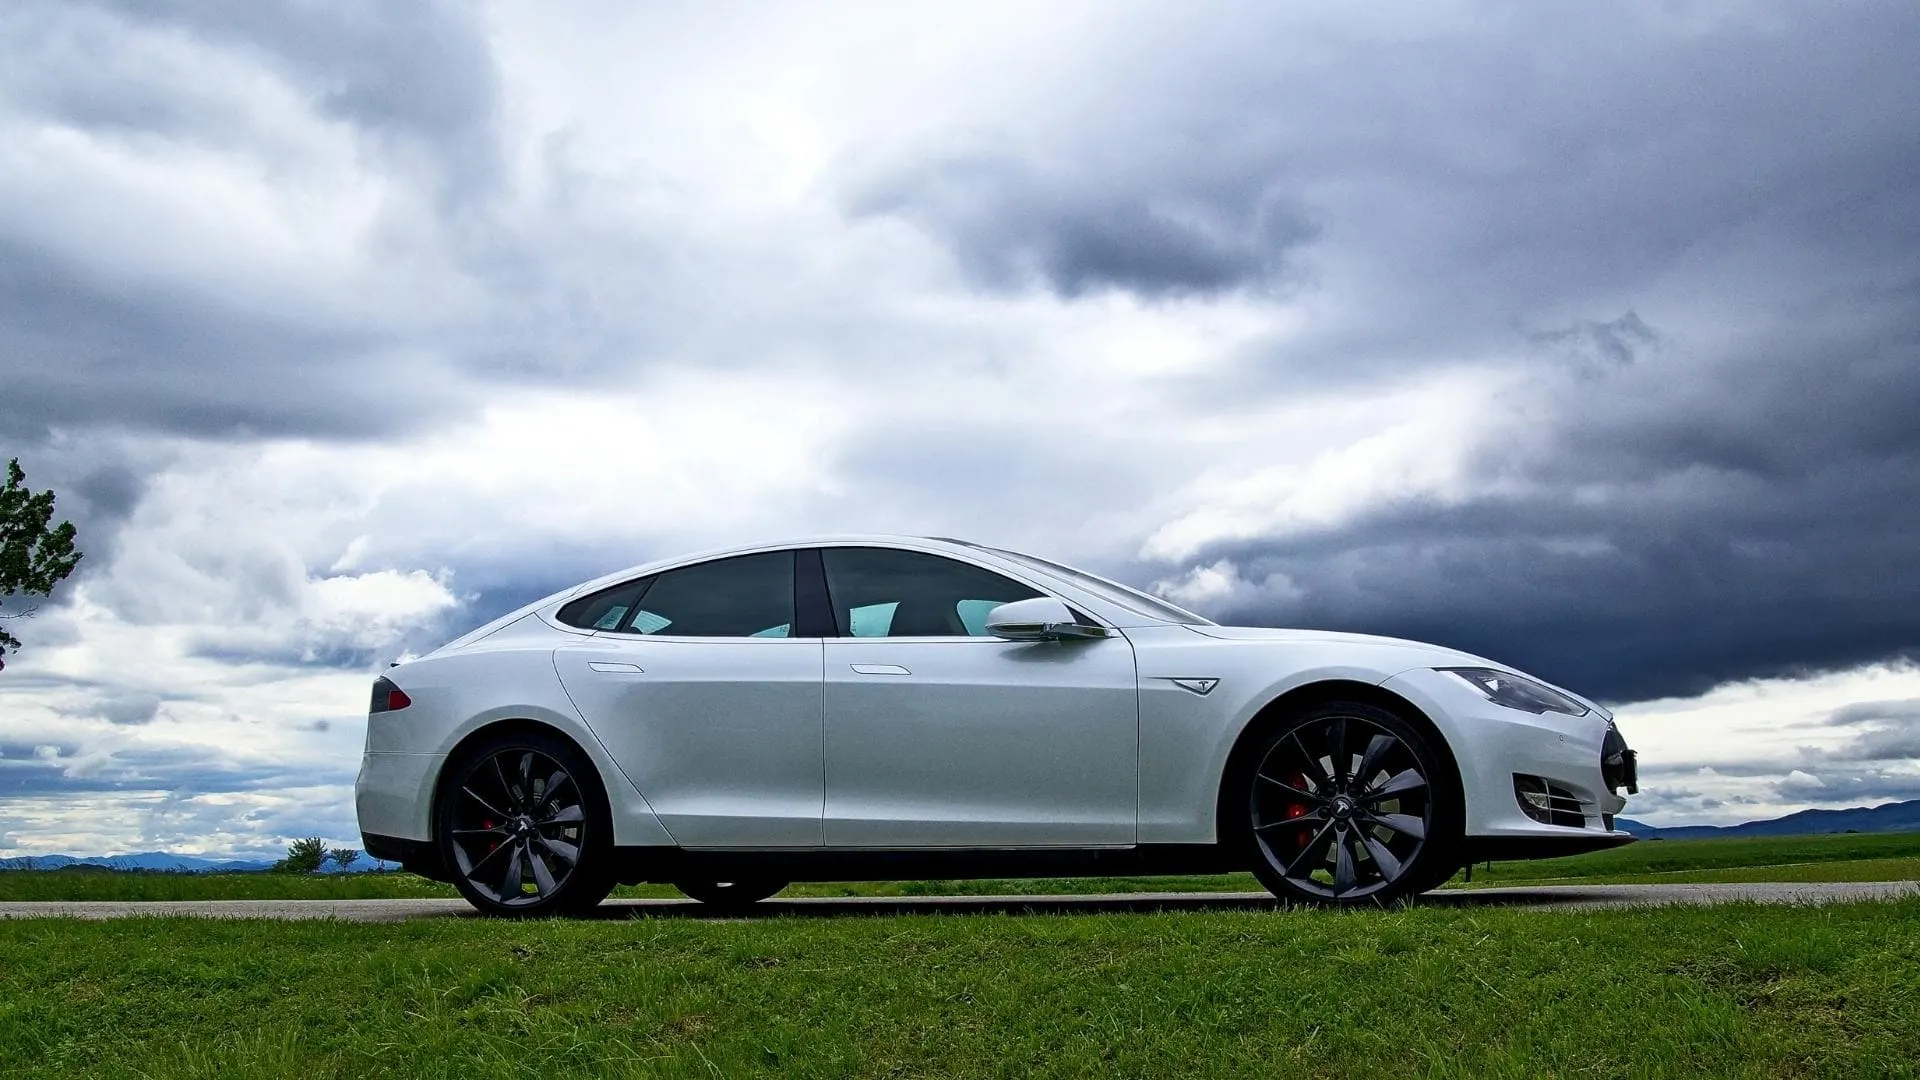 Photo of a Tesla Model S